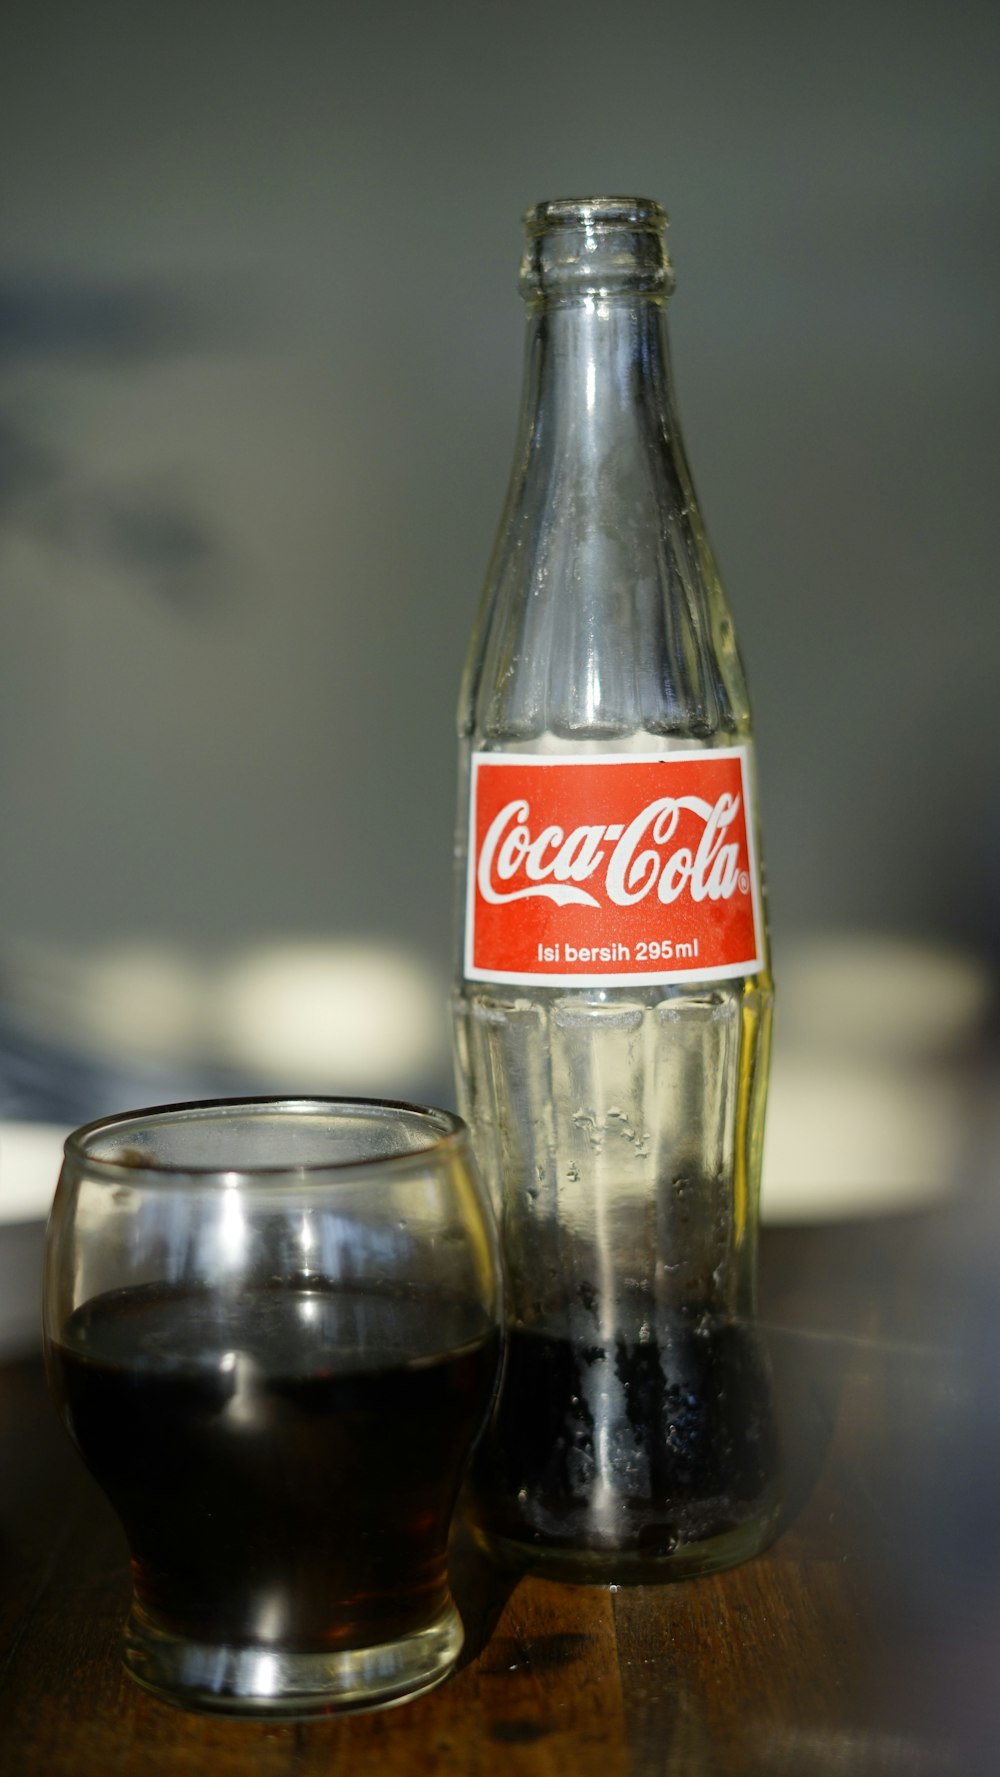 Coca-Cola soda bottle beside drinking glass